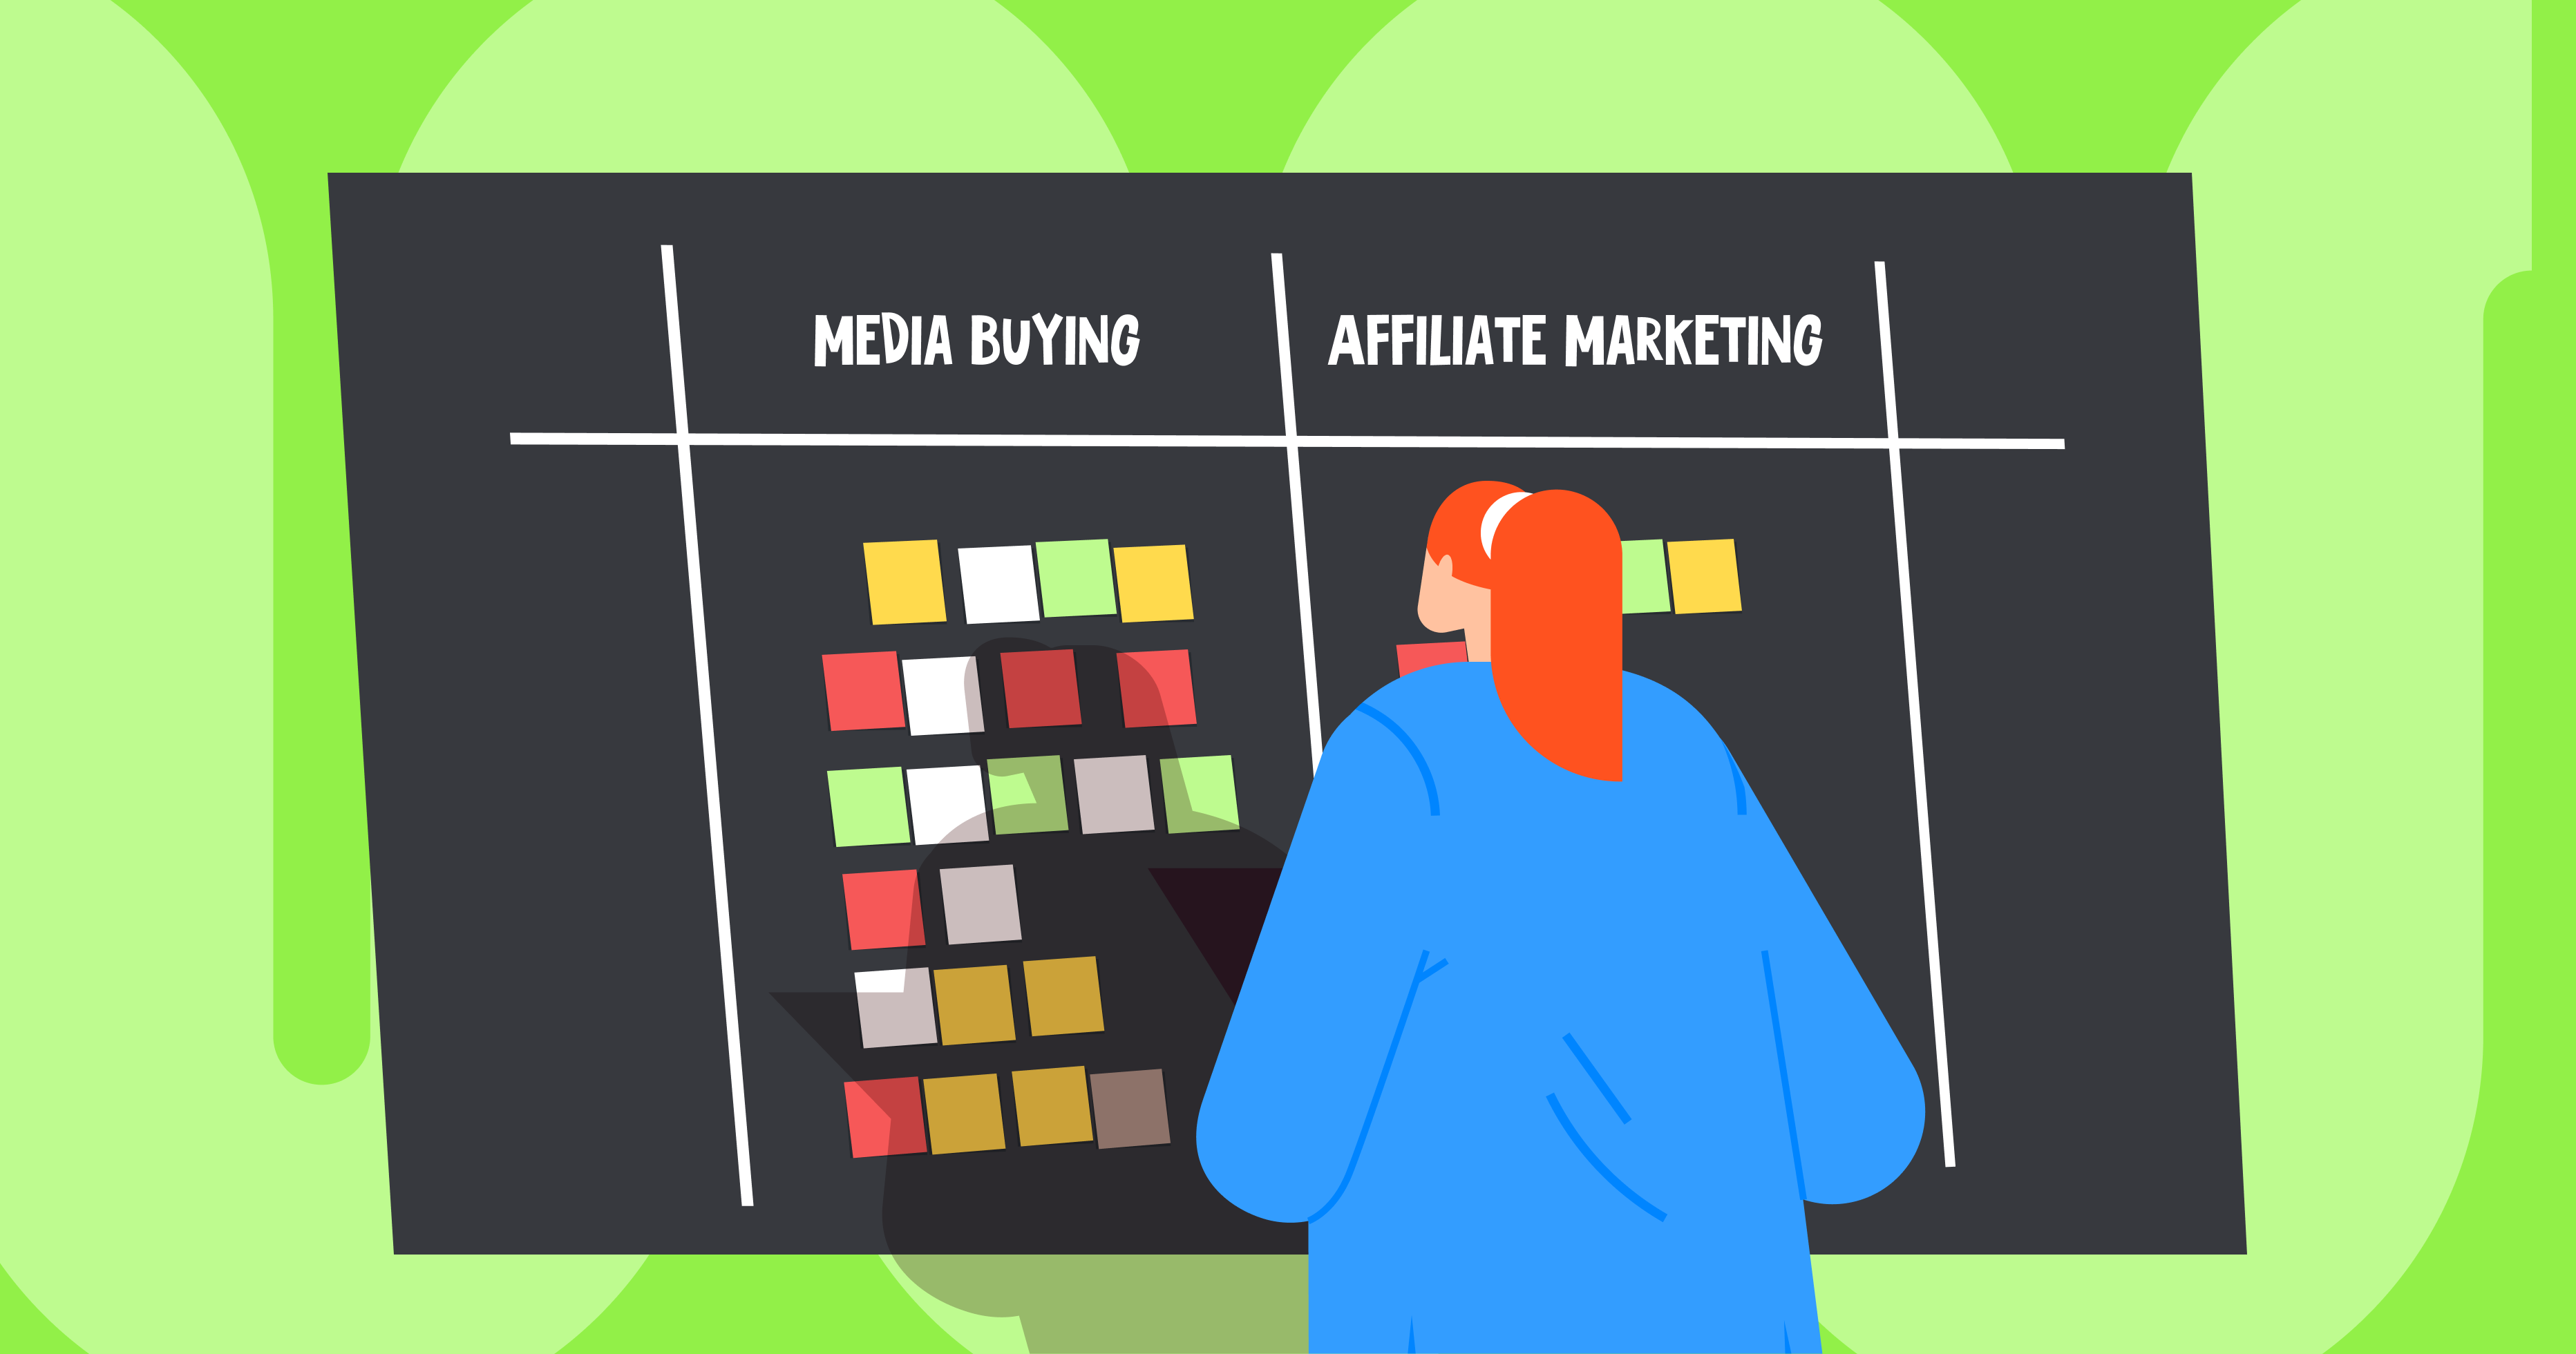 Affiliate marketing vs media buying